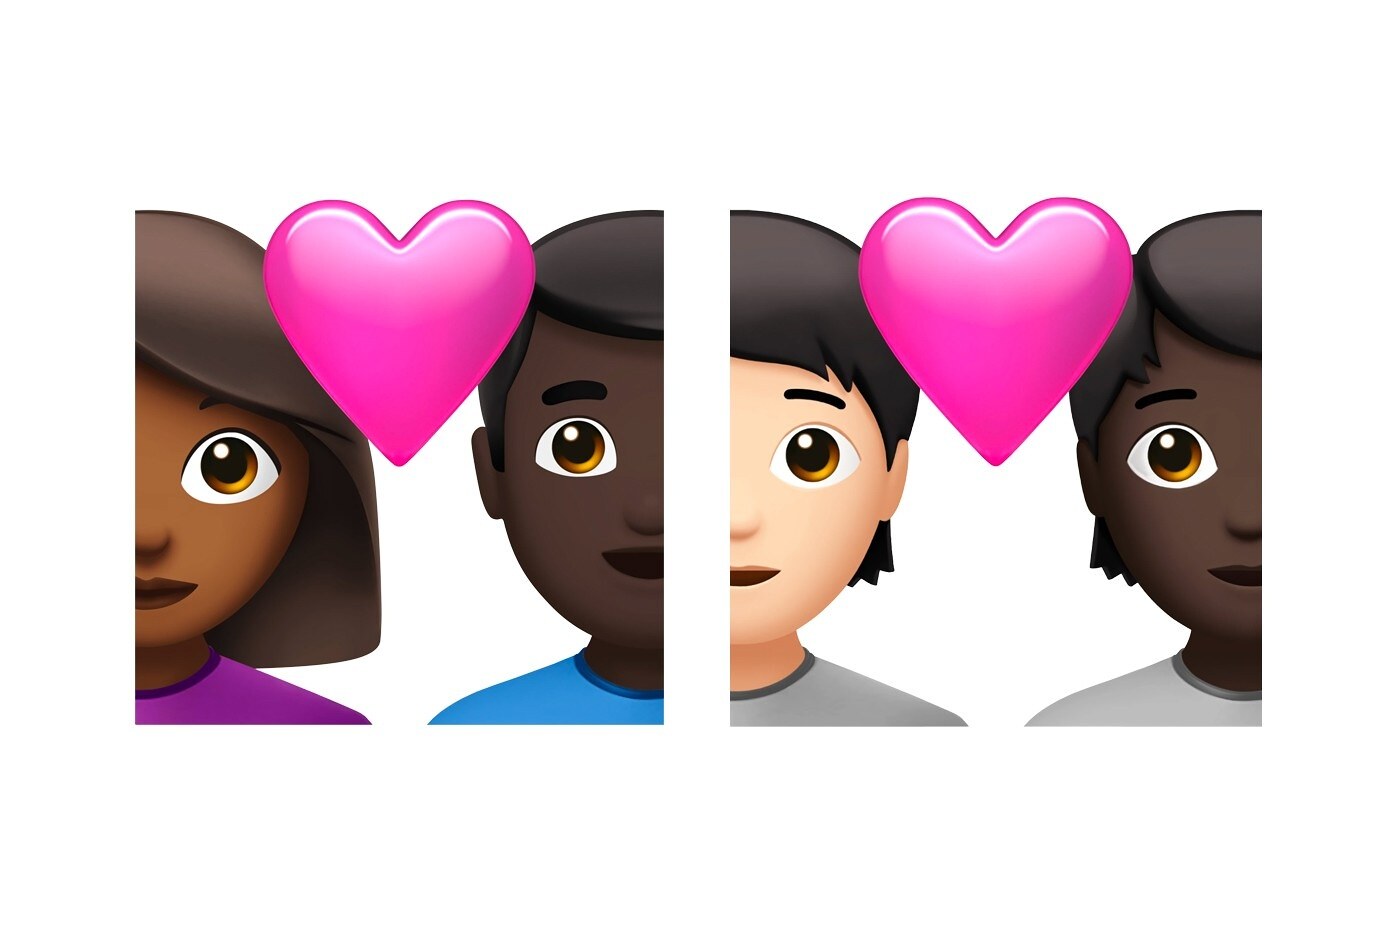 iOS 14.5 new emojis